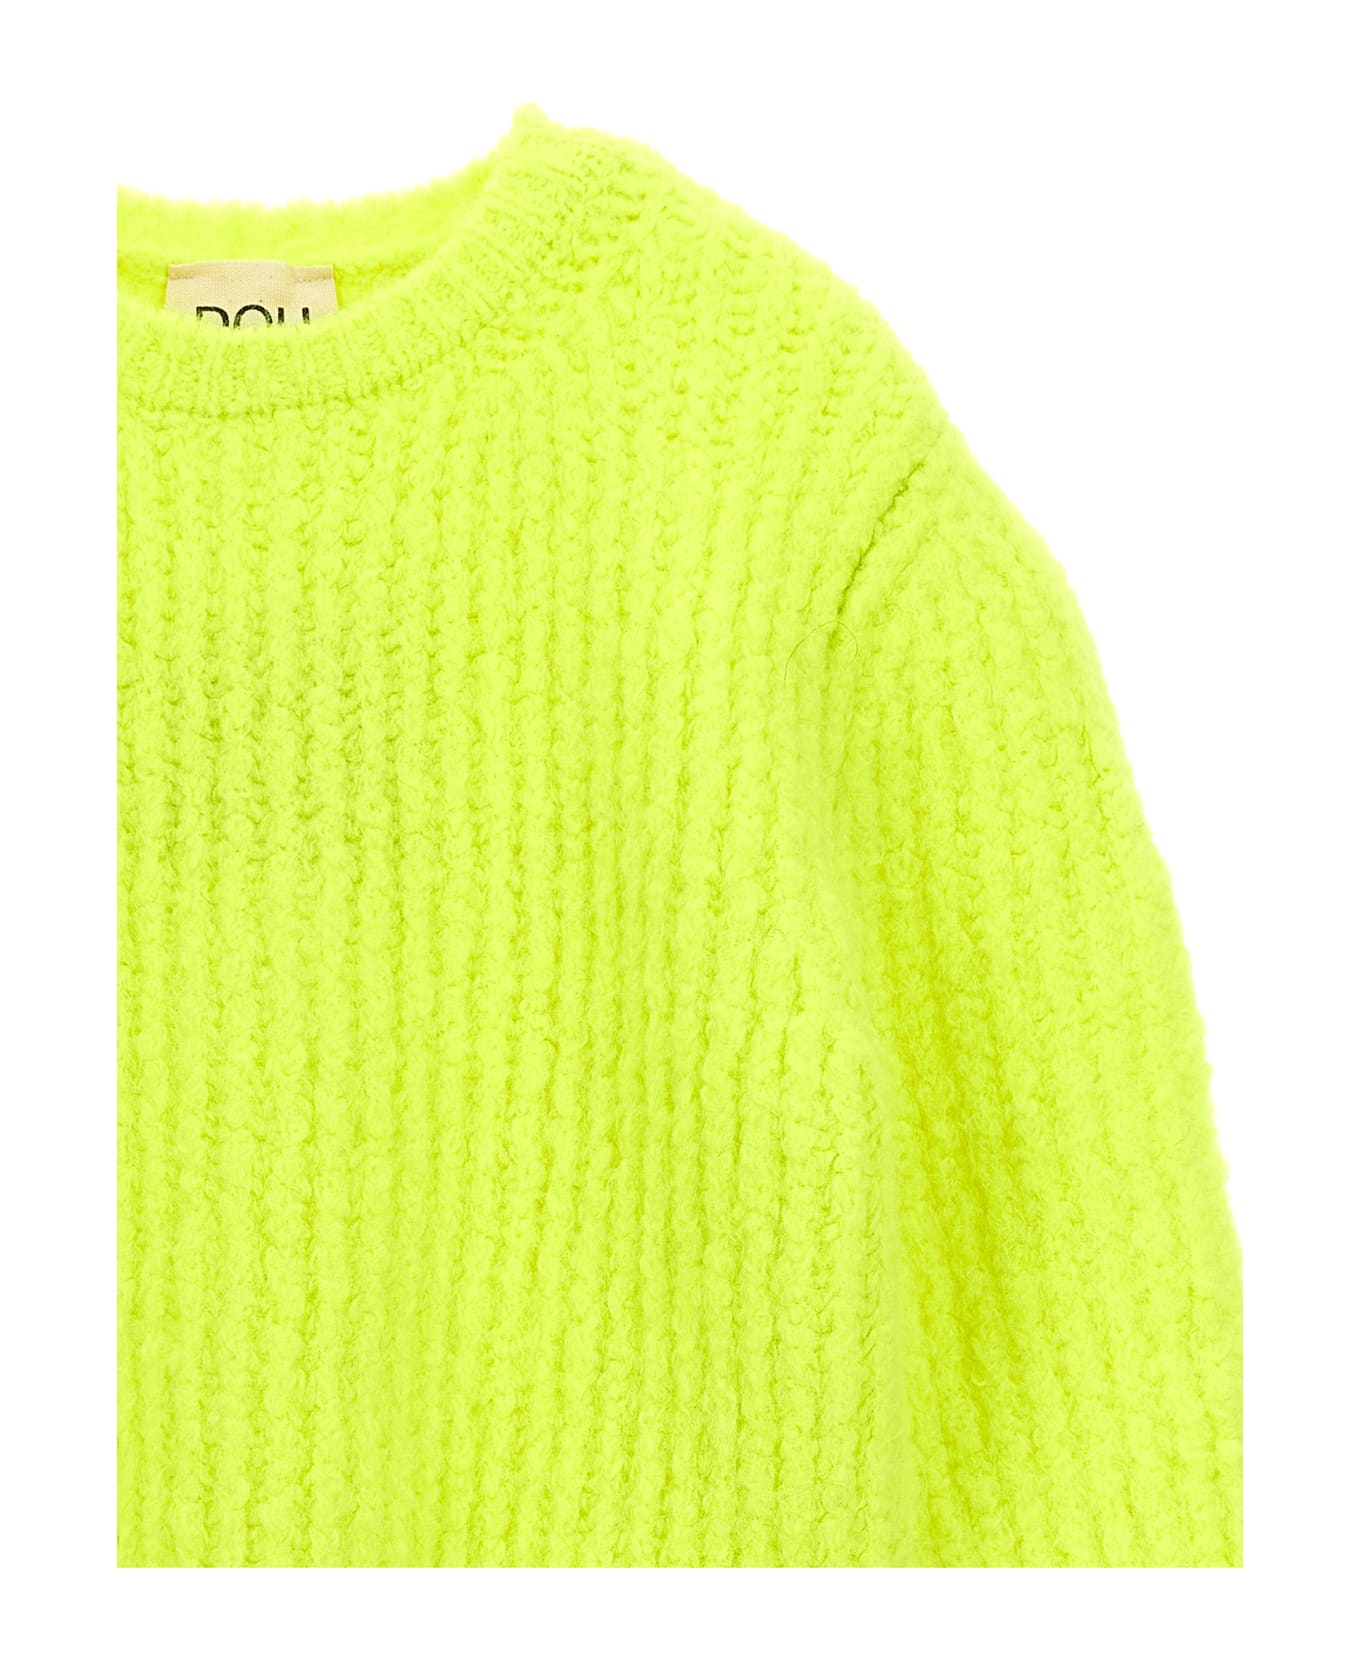 Douuod Fluo Sweater - Yellow